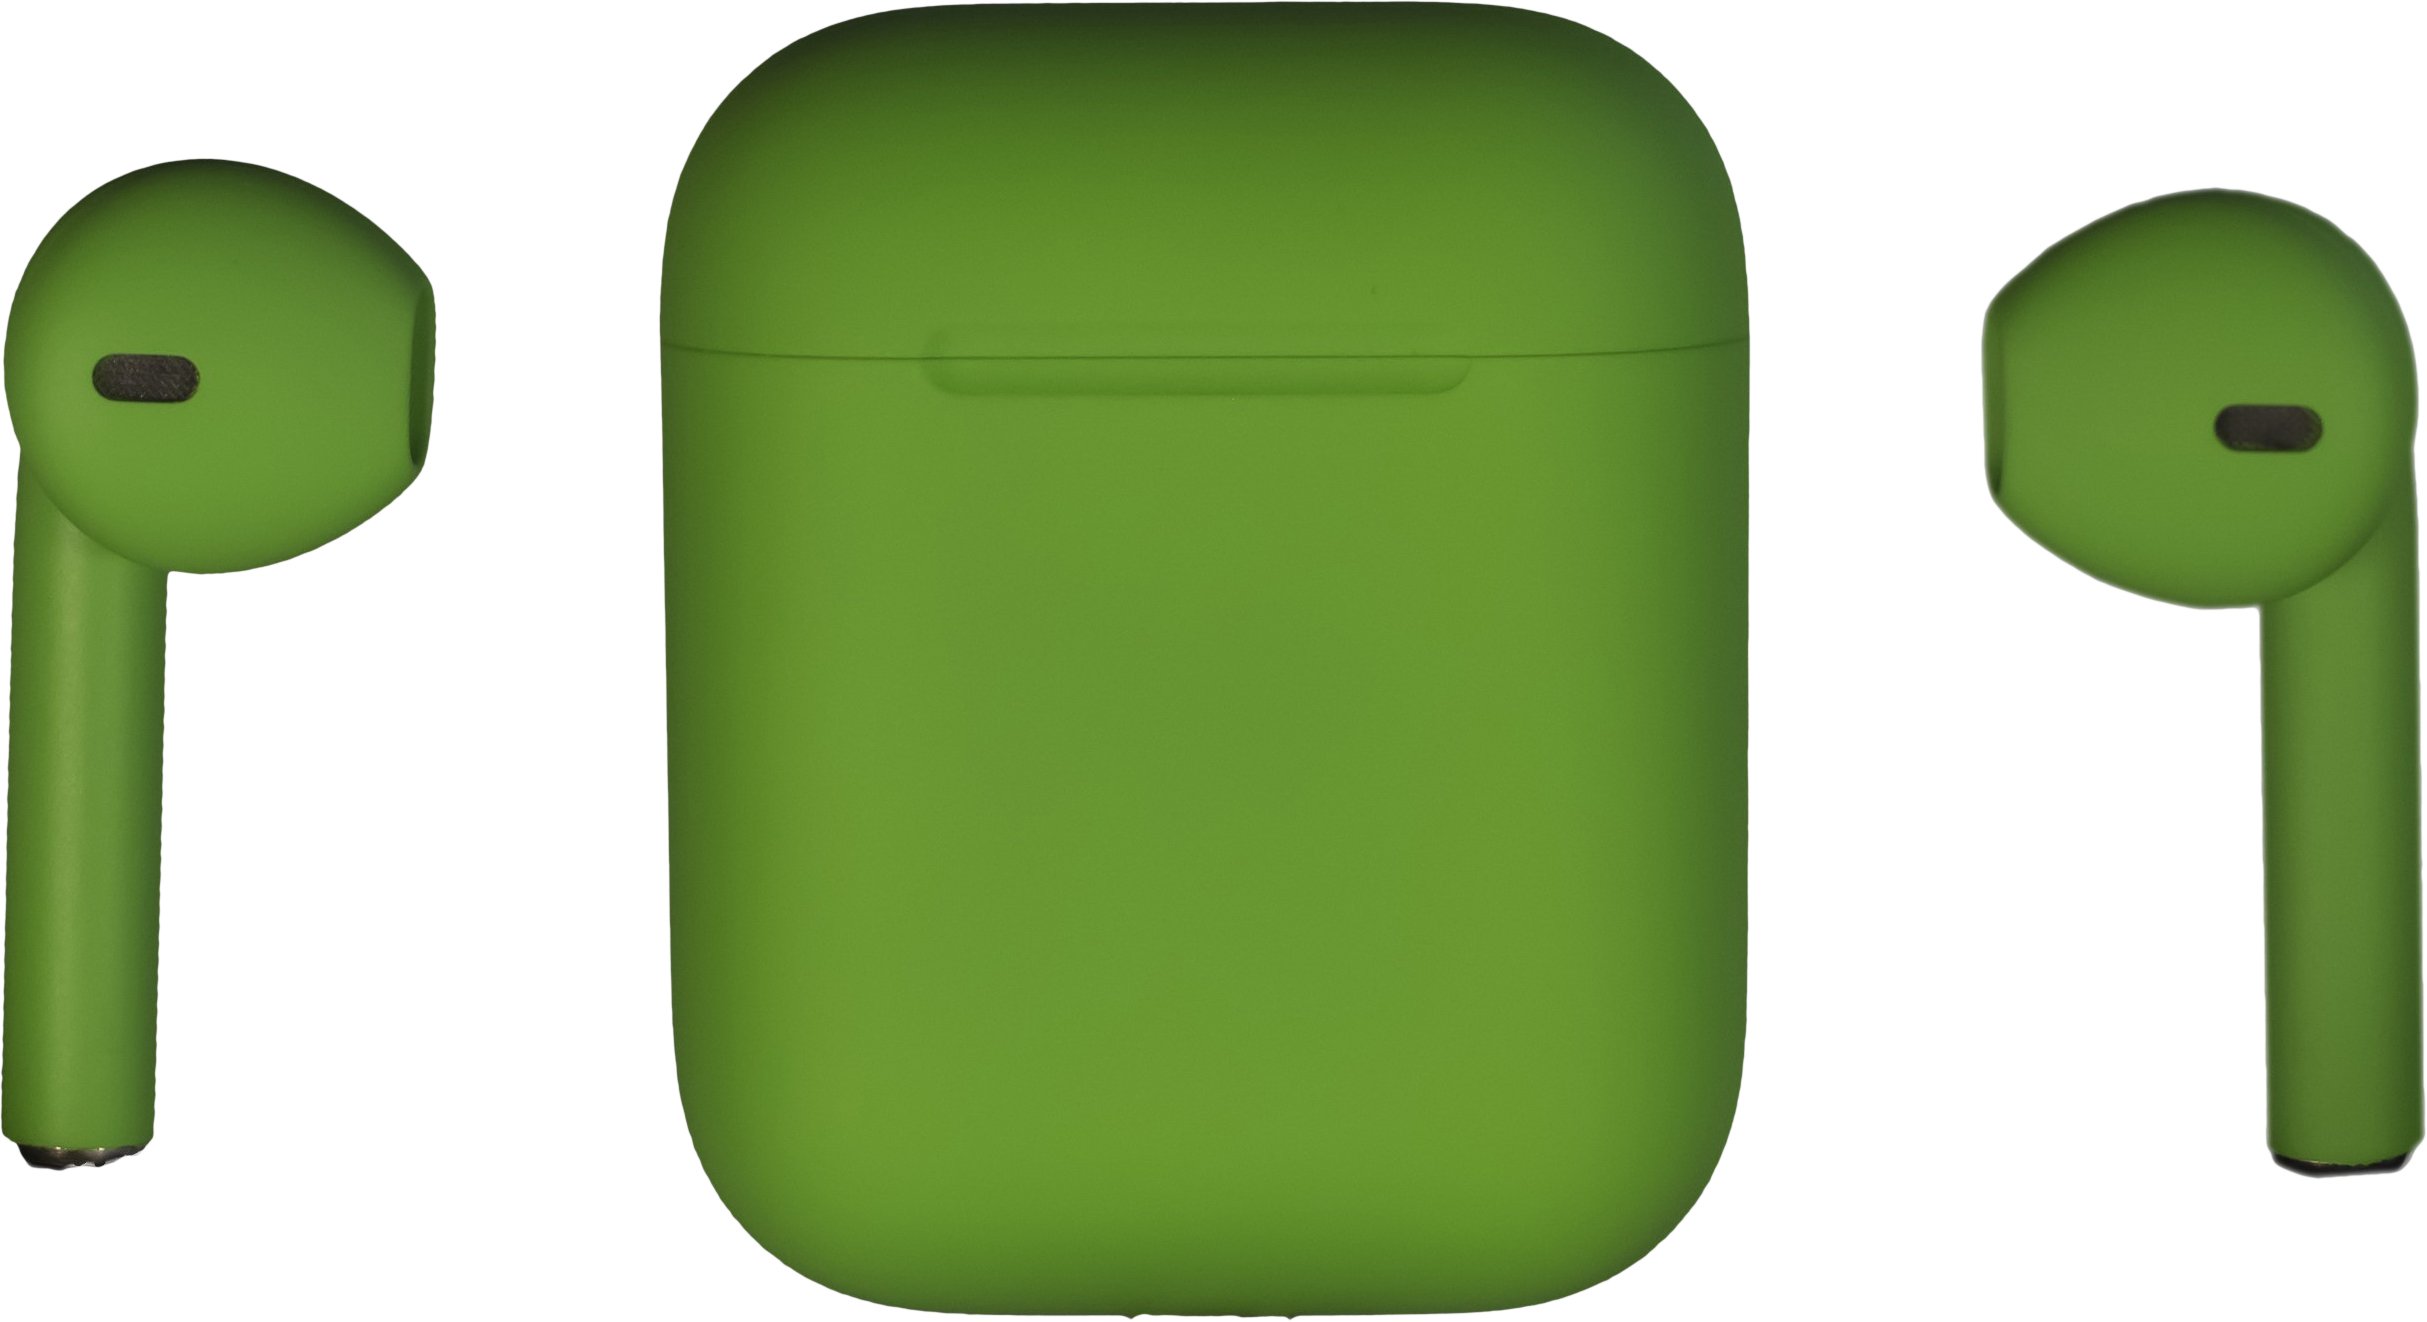 Airpods green. Apple AIRPODS 2 Color. Наушники Apple AIRPODS Max, зеленый. Наушники Apple беспроводные зеленые. Беспроводные наушники Apple AIRPODS Pro 2 (матовые), зеленый матовый.